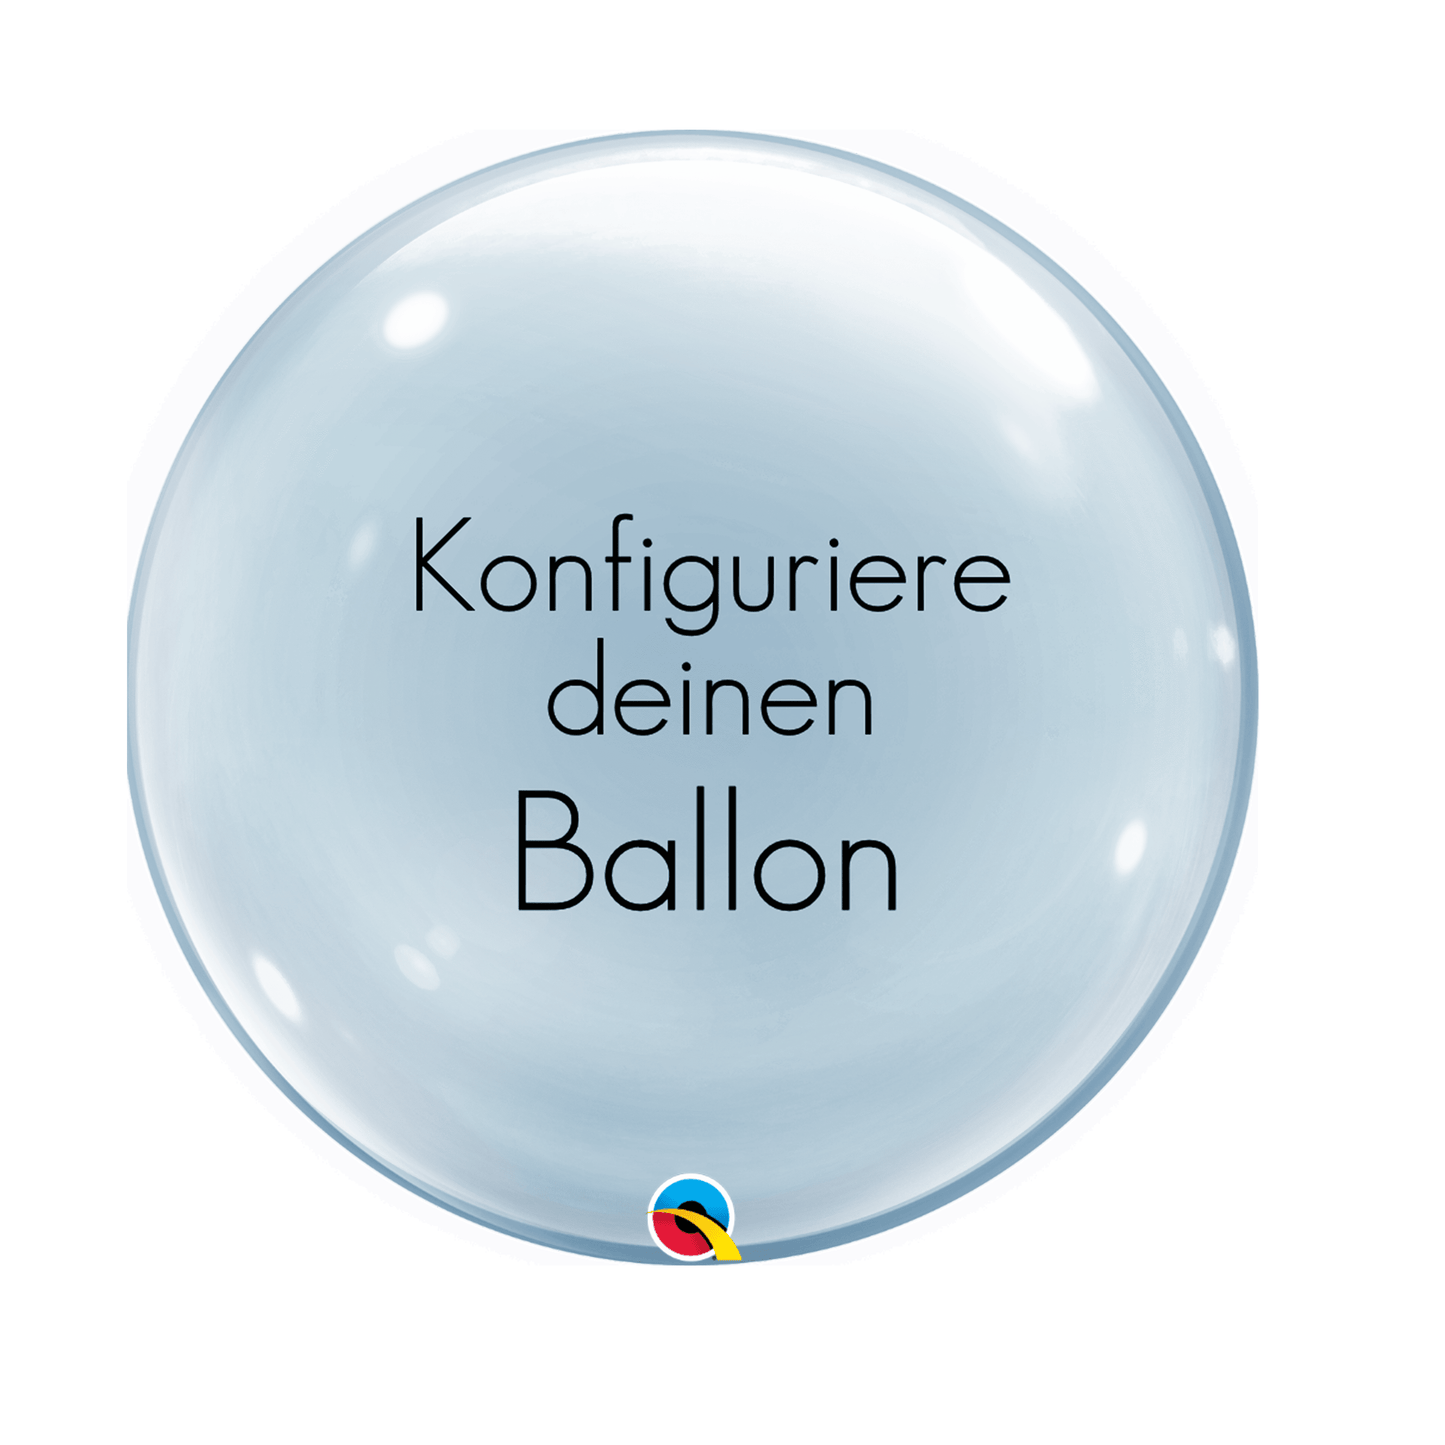 Ballon Designer - personalisierter Ballongruß mit Helium gefüllt - Ballons versenden - Ballon im Karton